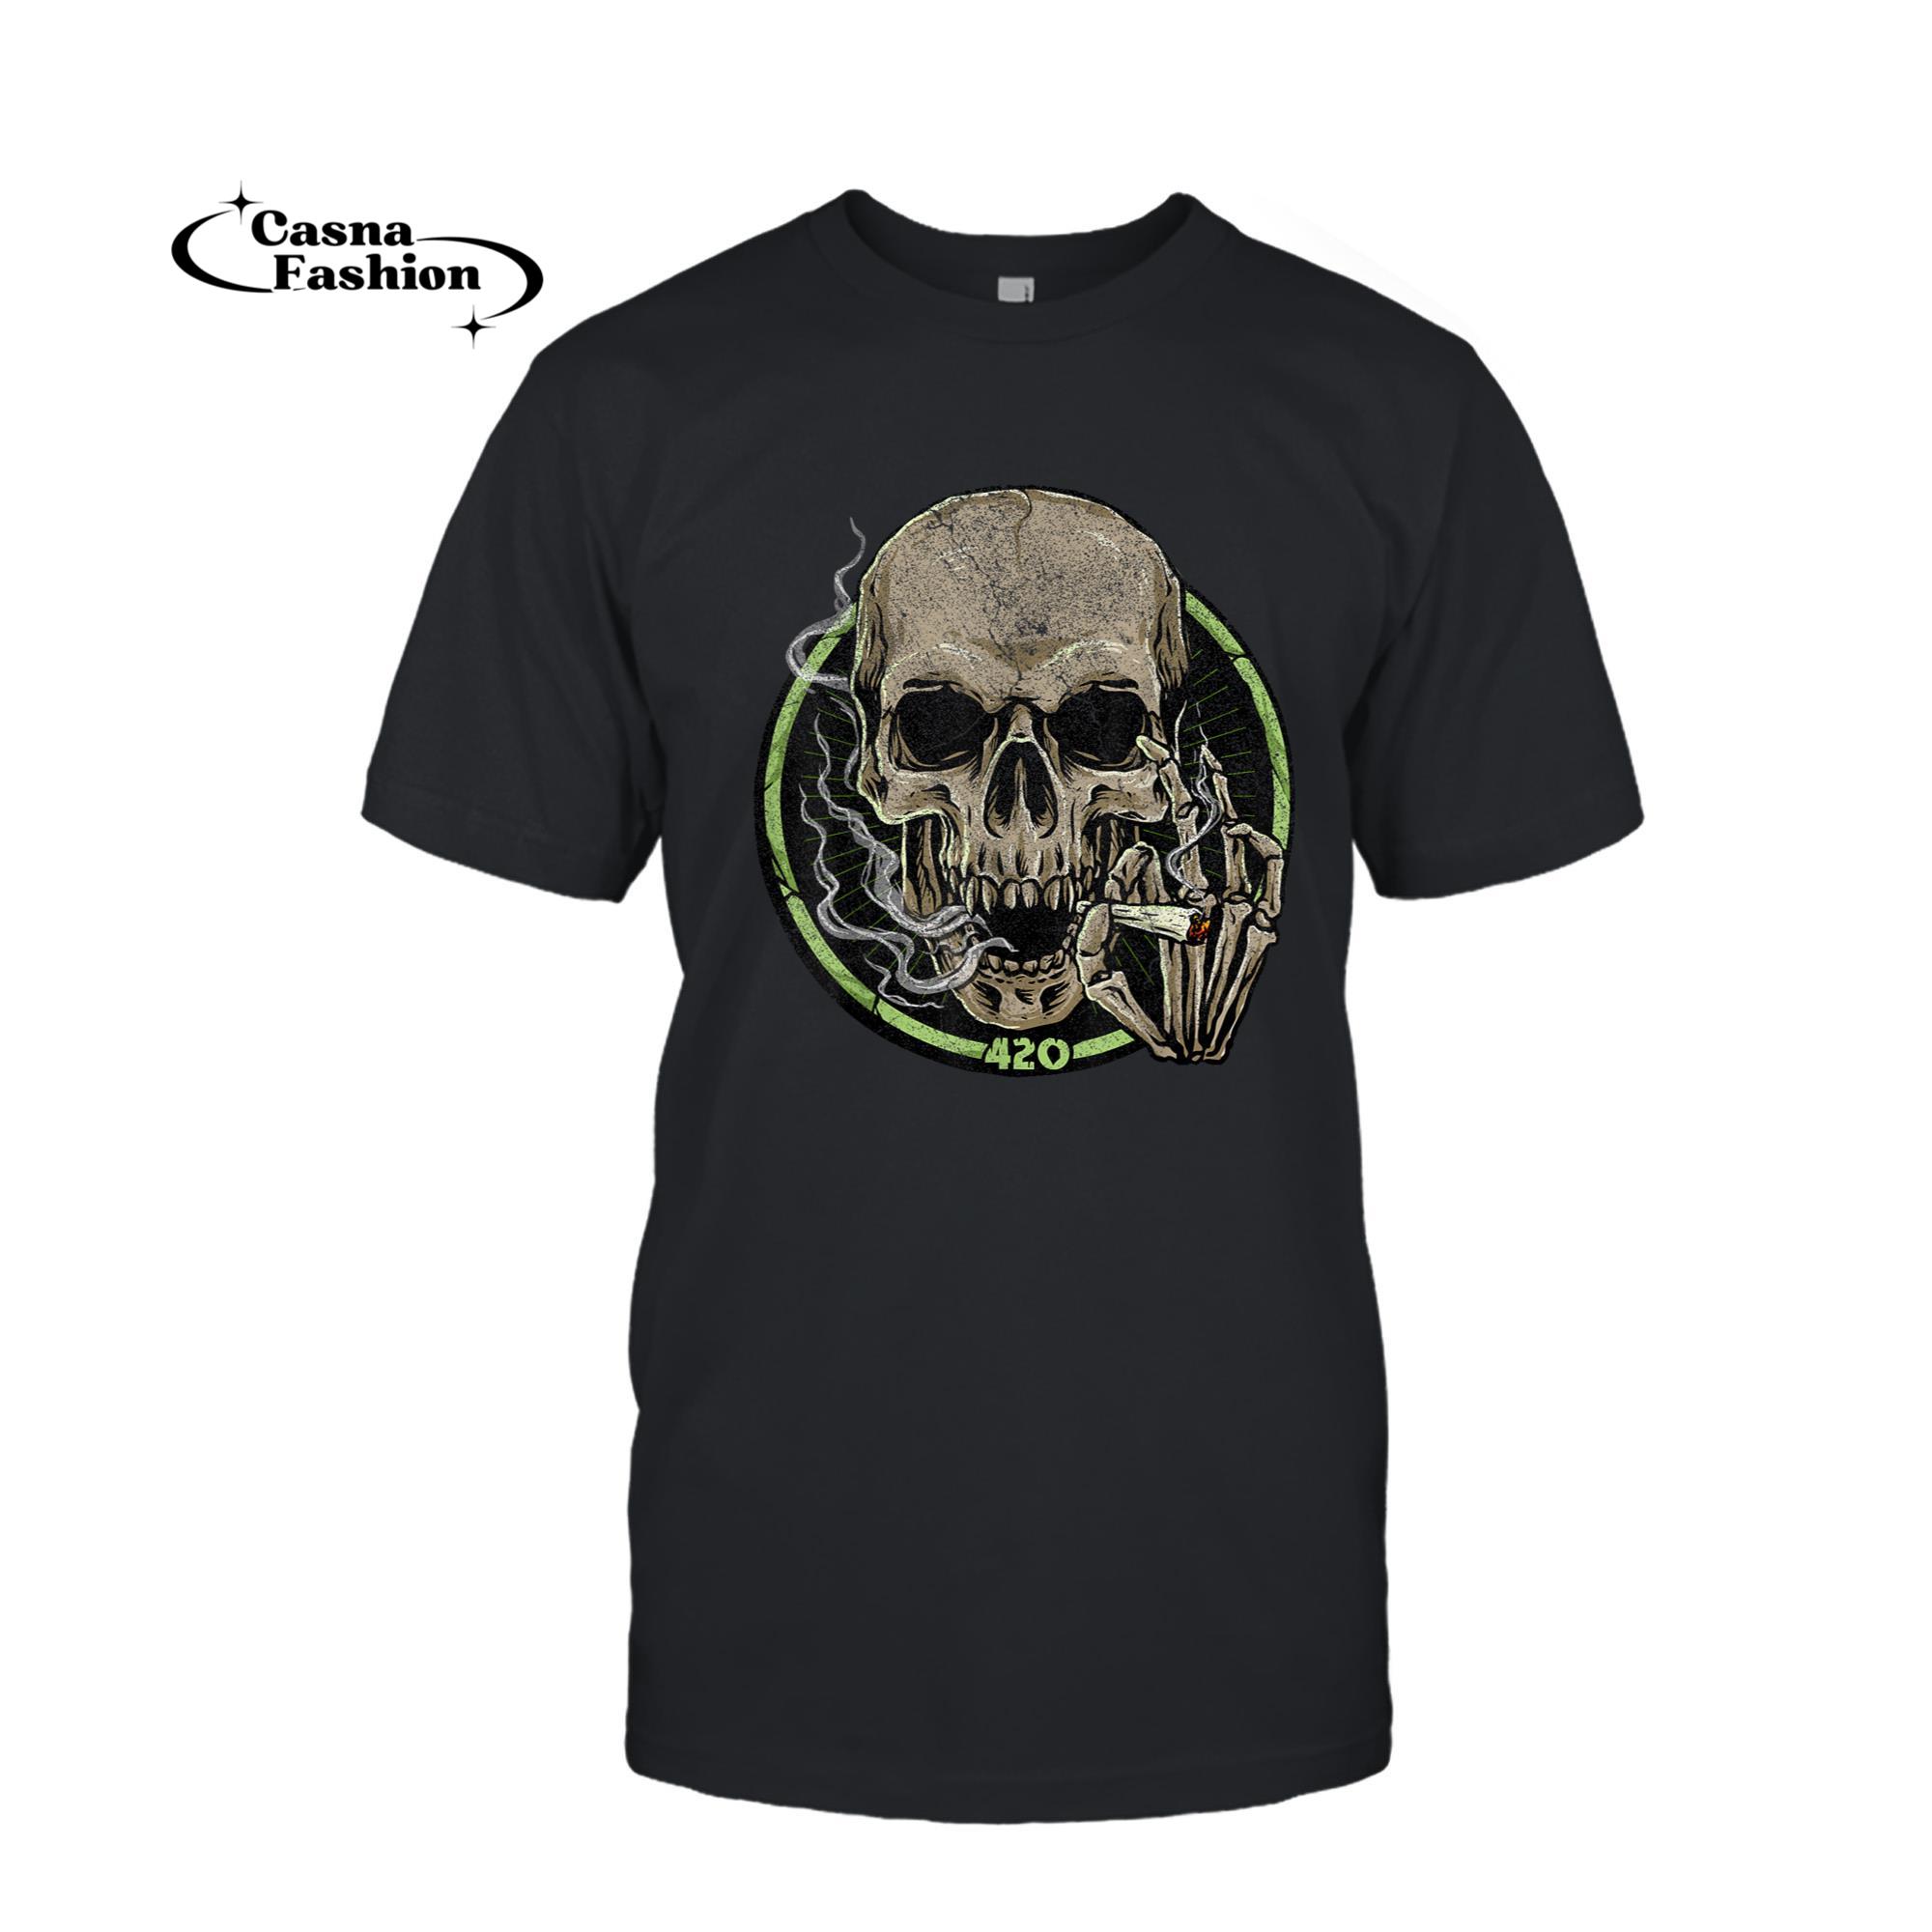 casnafashion_T-shirt_Smoking Skull Graphic Tee Musician Skeleton Party Tee T-Shirt_T-shirt_Black